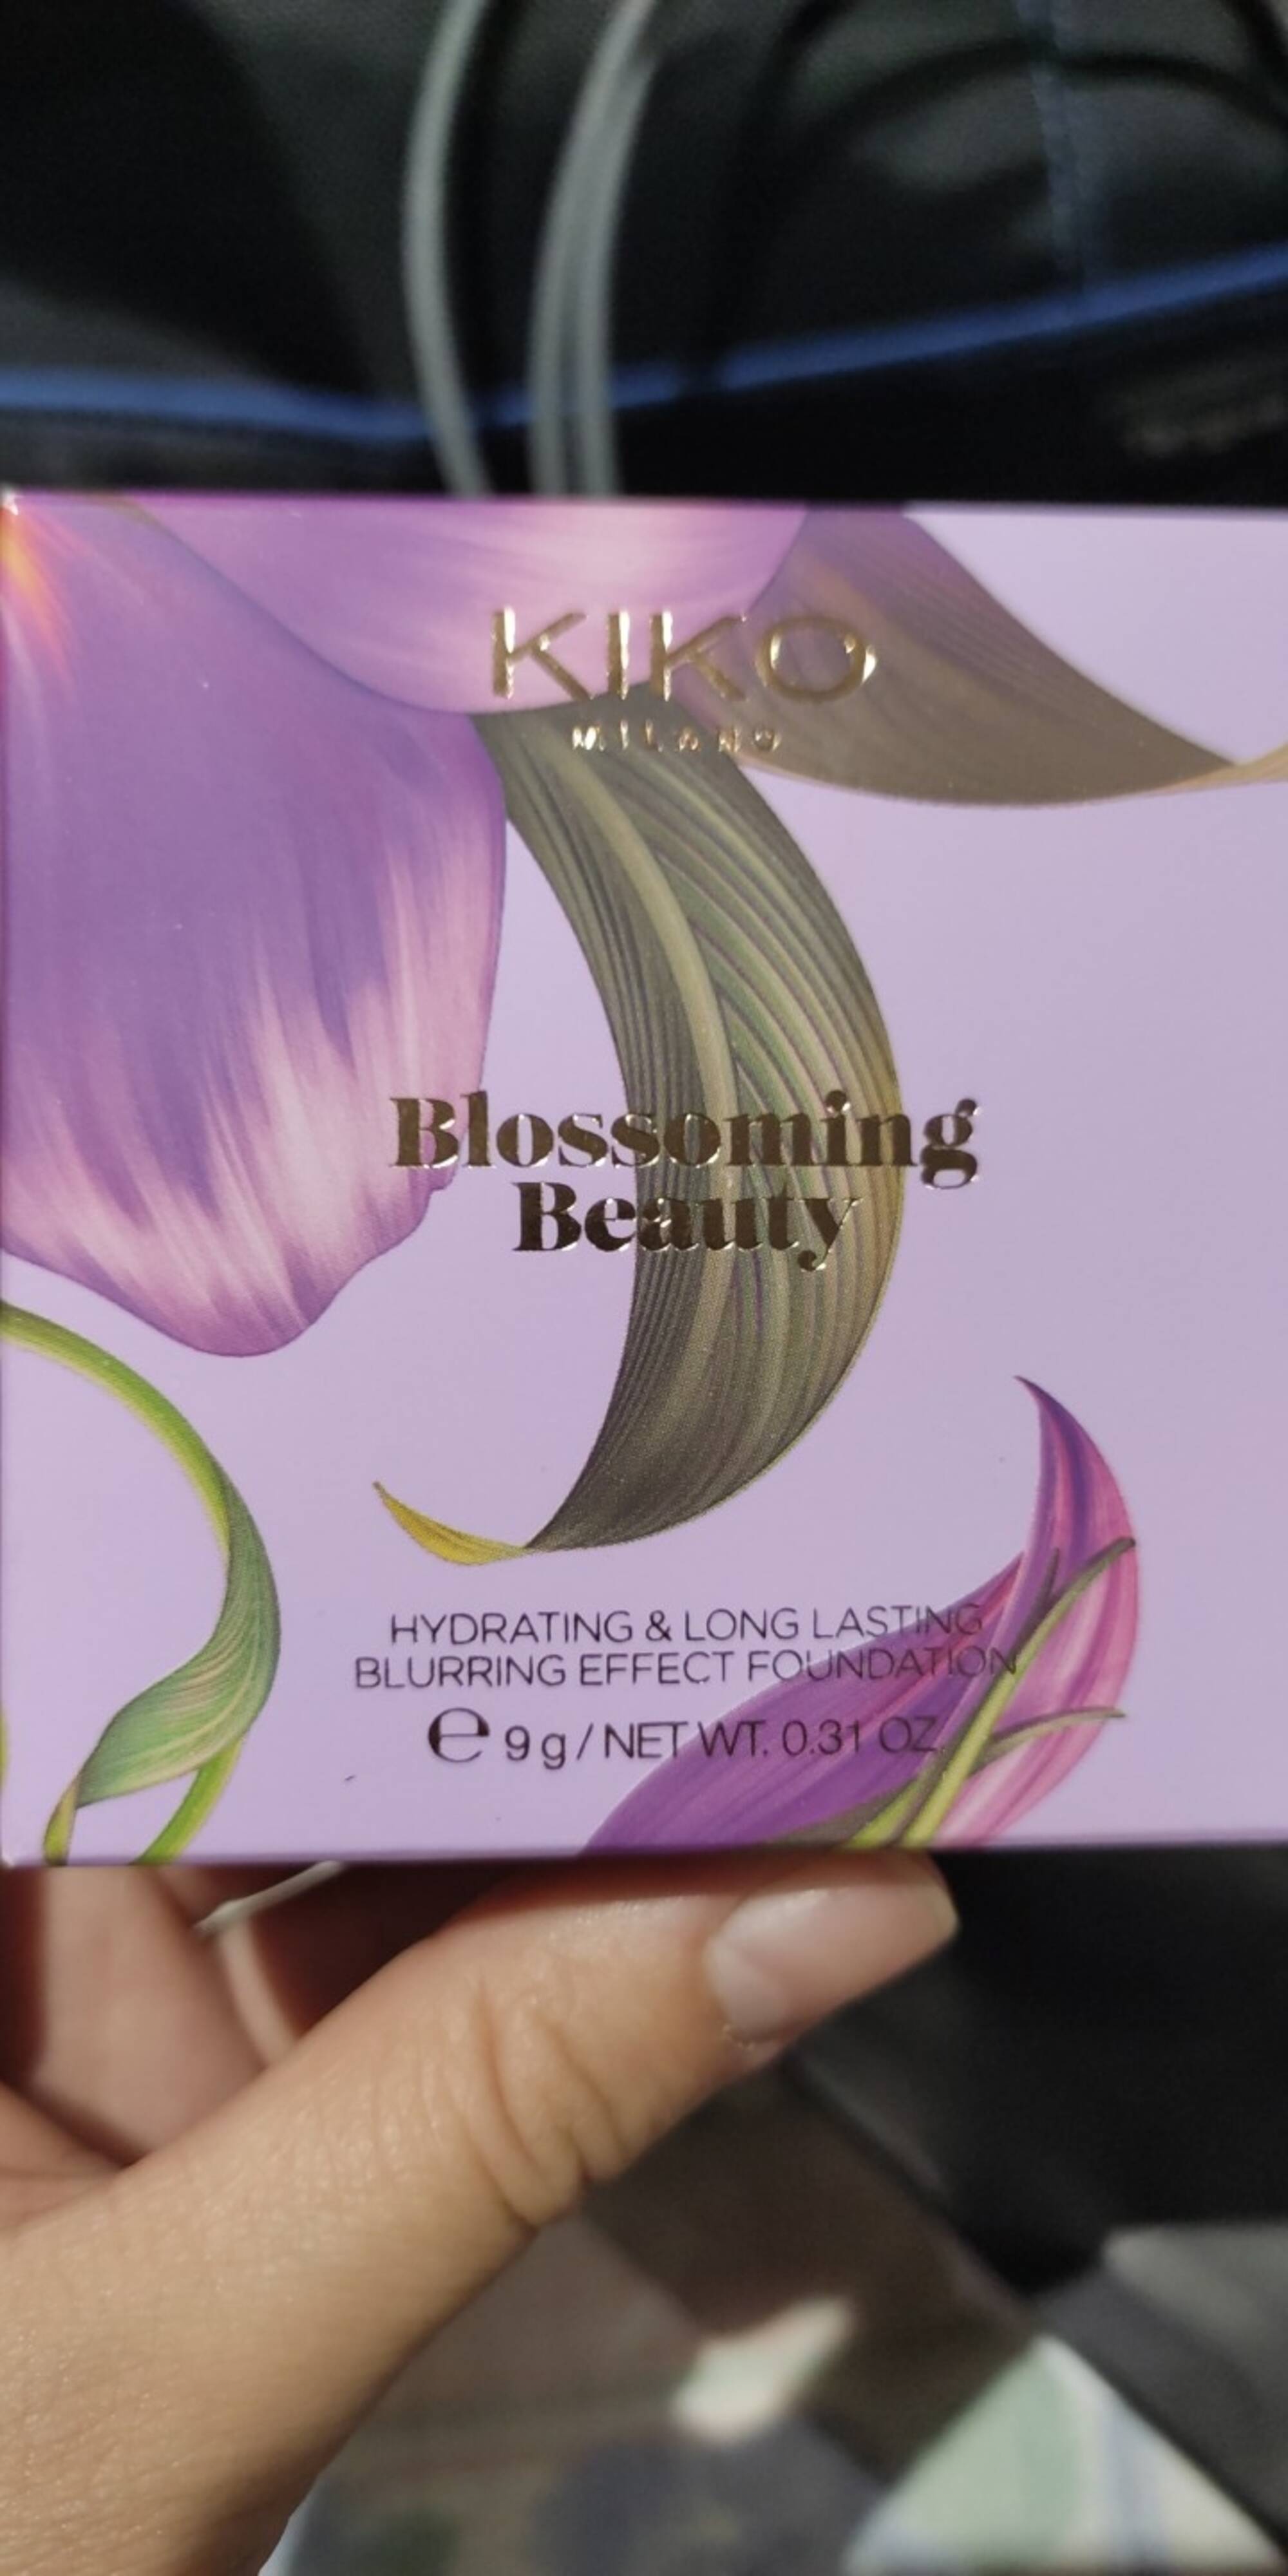 KIKO MILANO - Blossoming beauty - Hydrating & long lasting blurring effect foundation